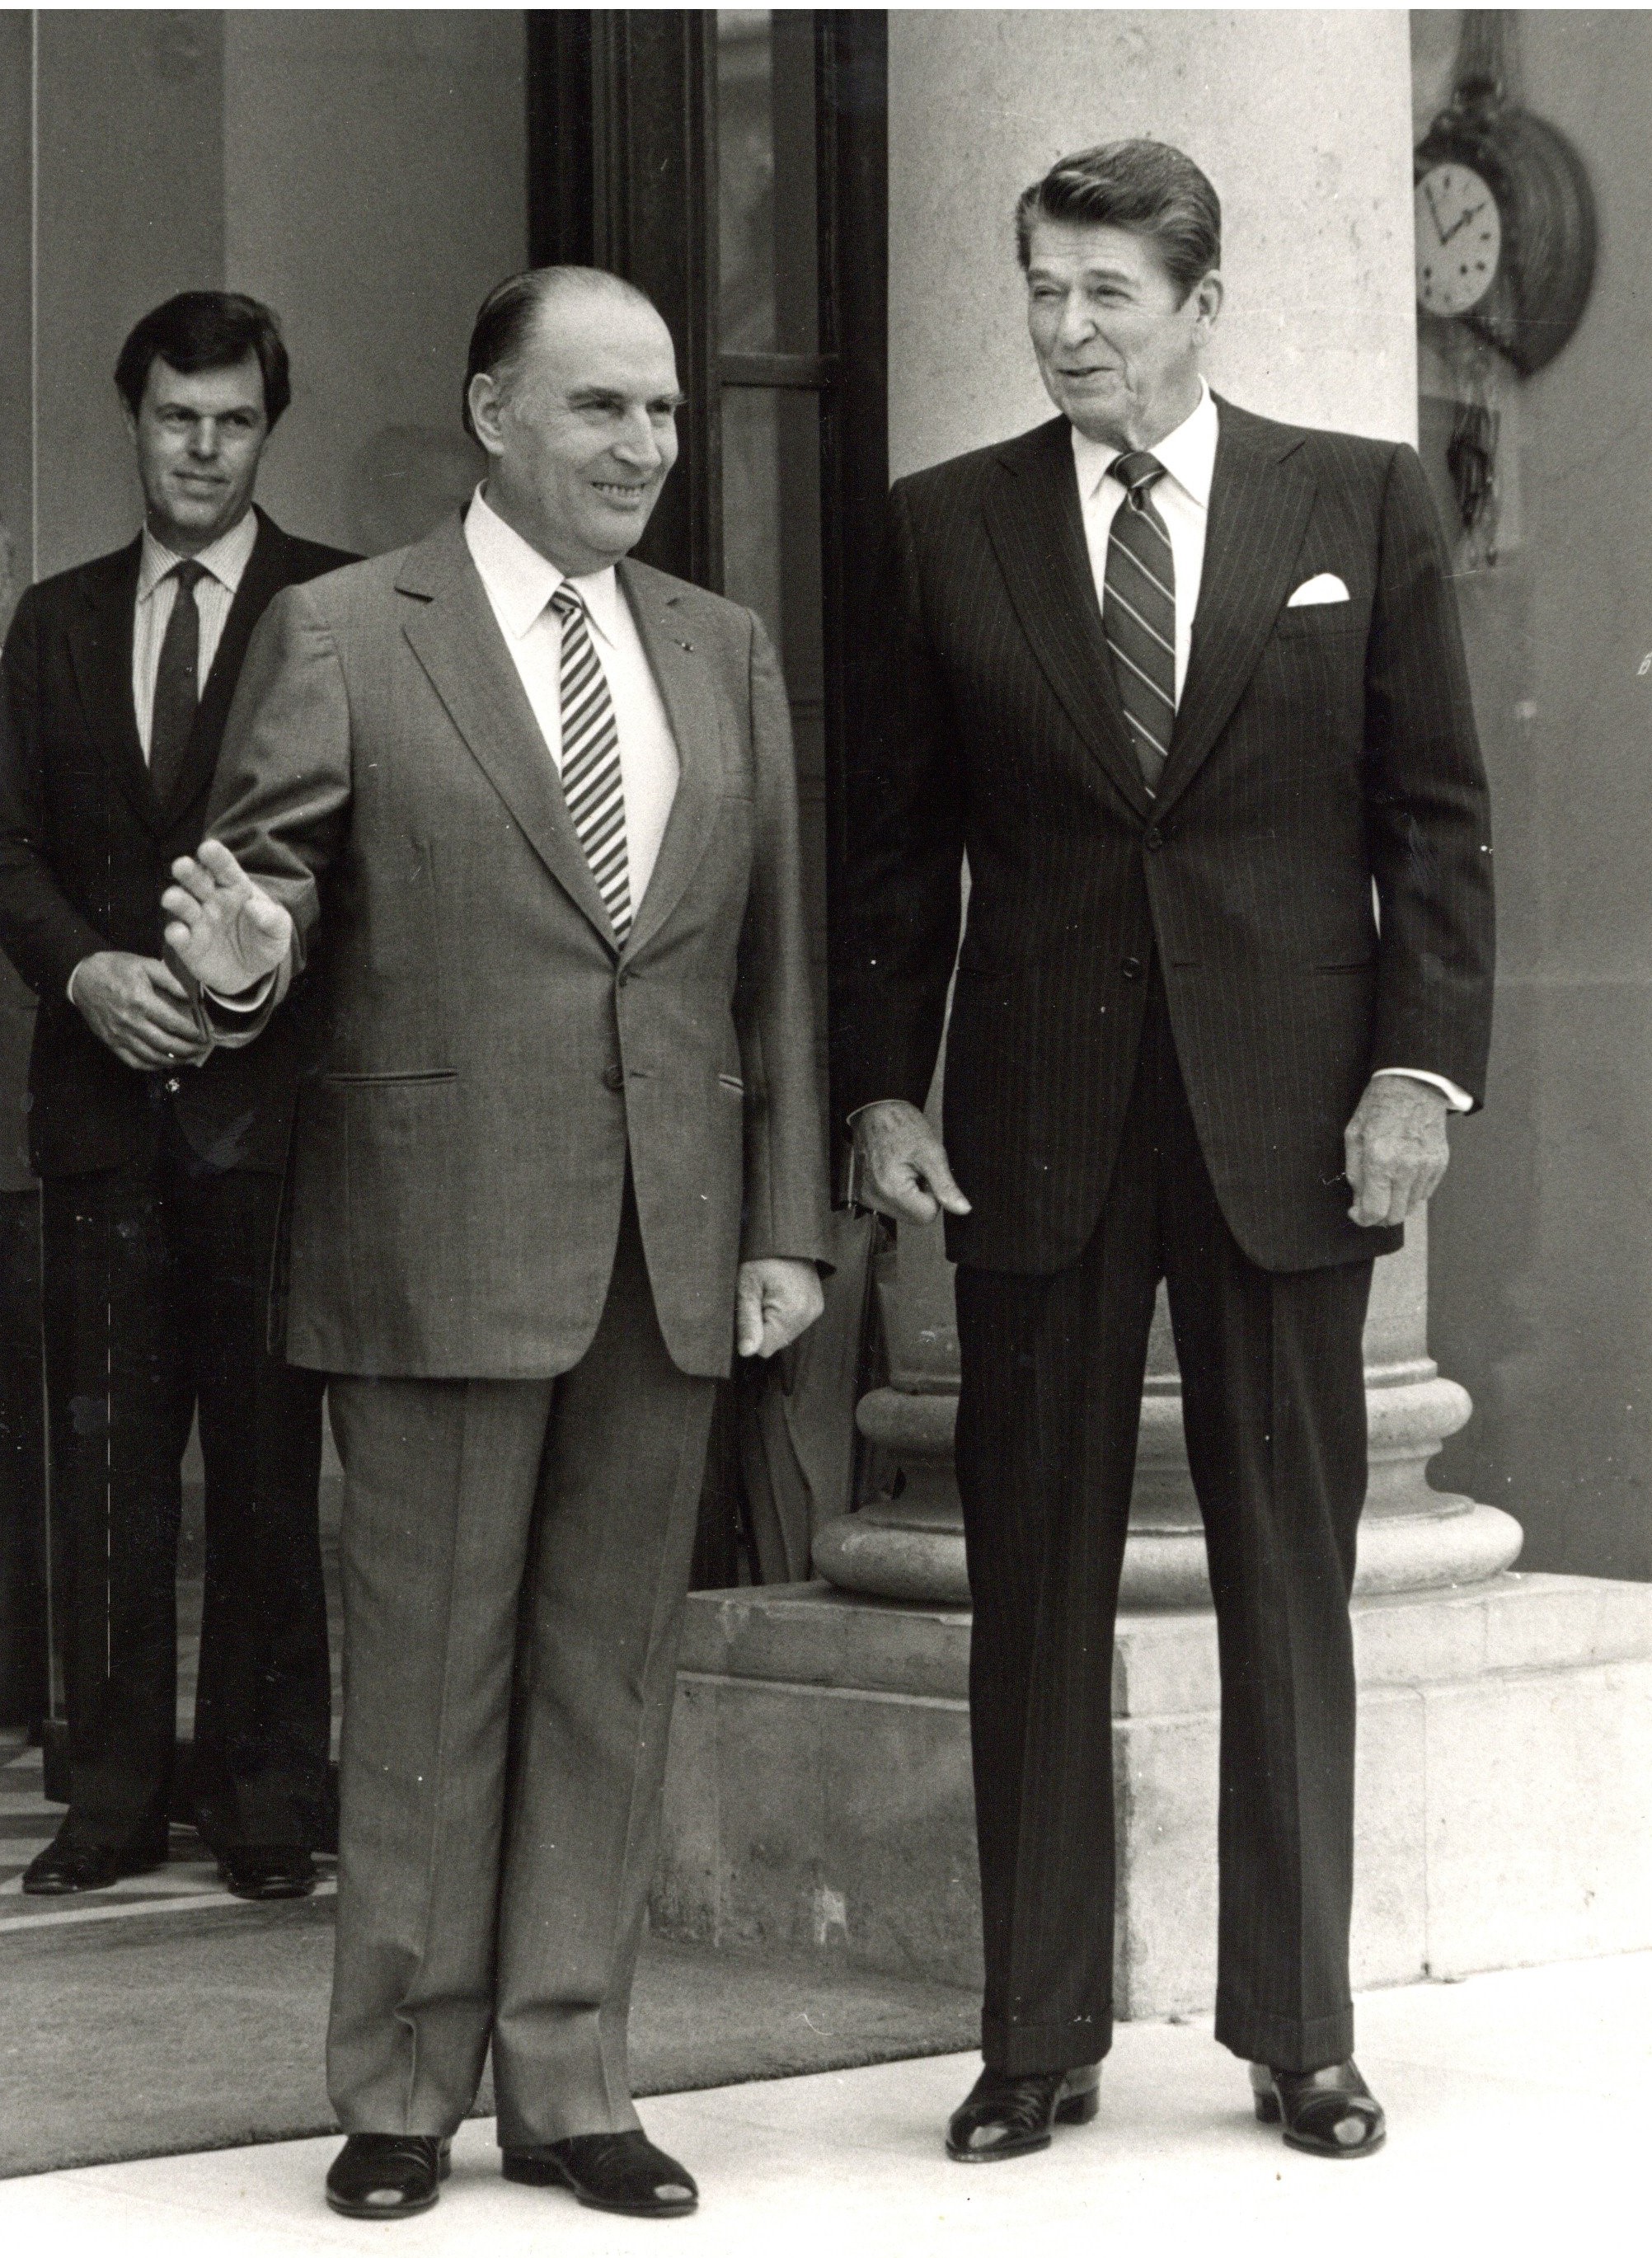 Original Photographs of Presidents Eisenhower and Reagan;